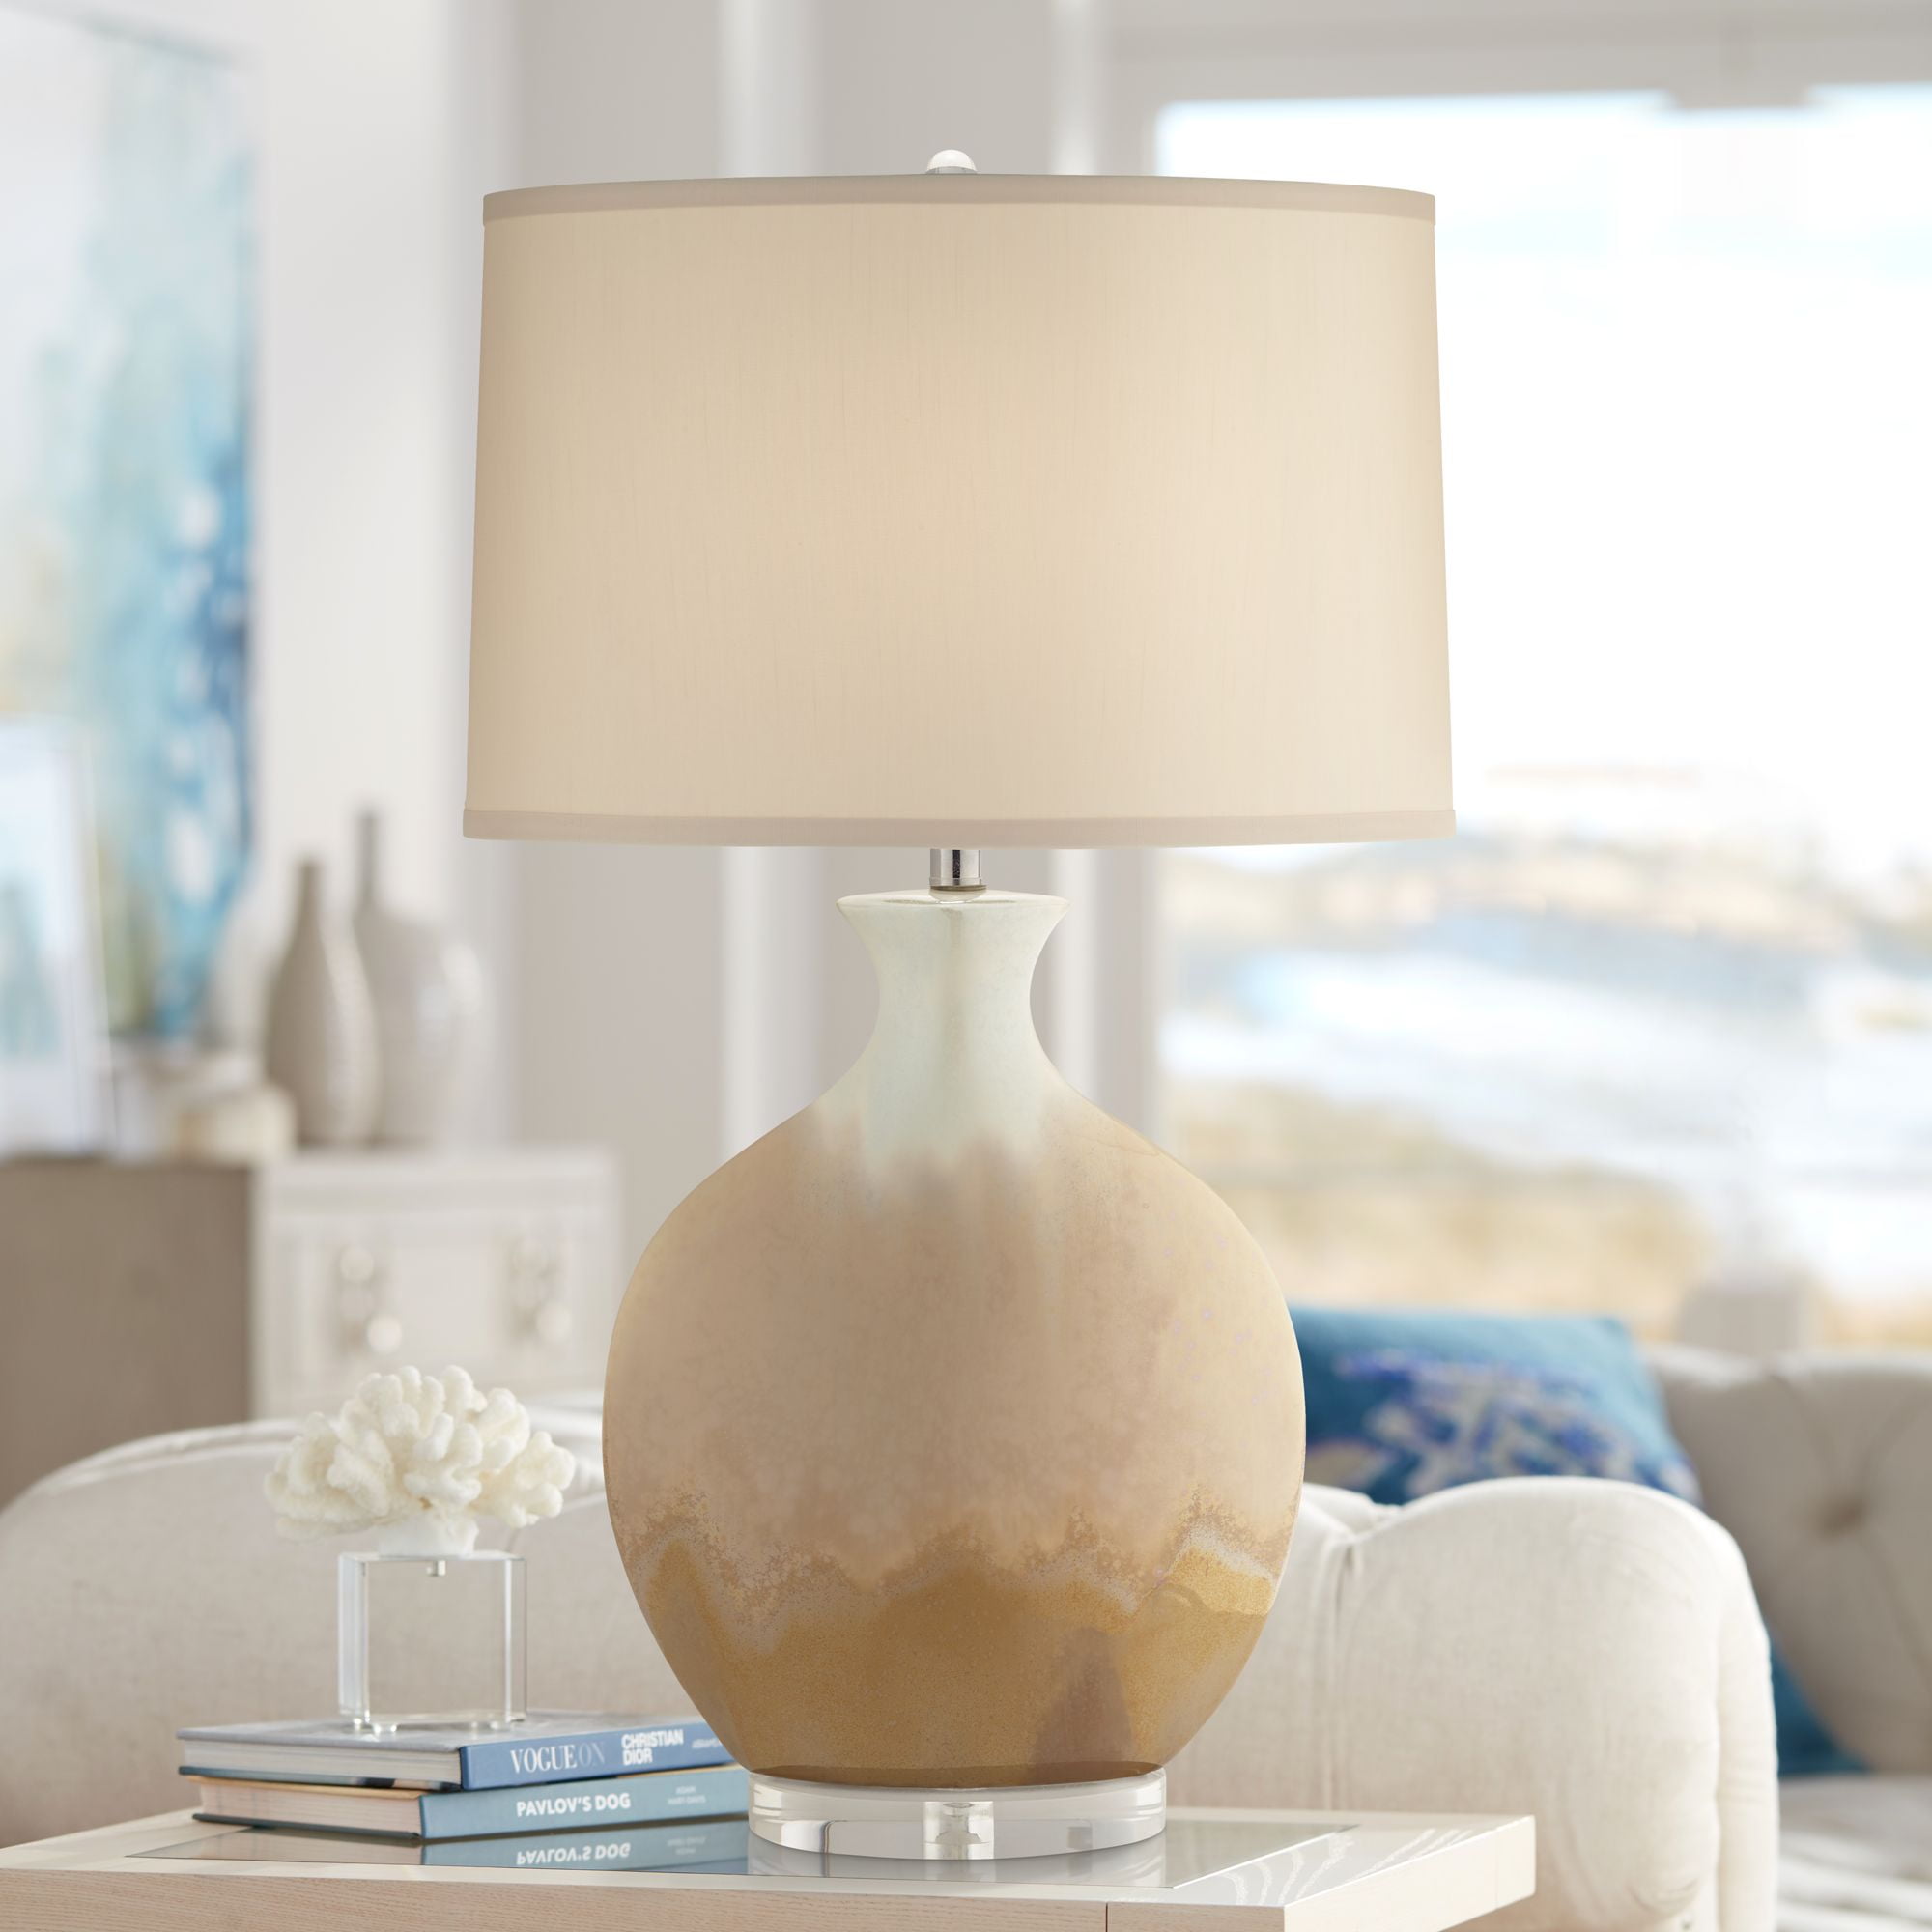 Details about   Black White Gold Ceramic Lamp Vase Modern Design Table Light Bulb Home Decor Set 